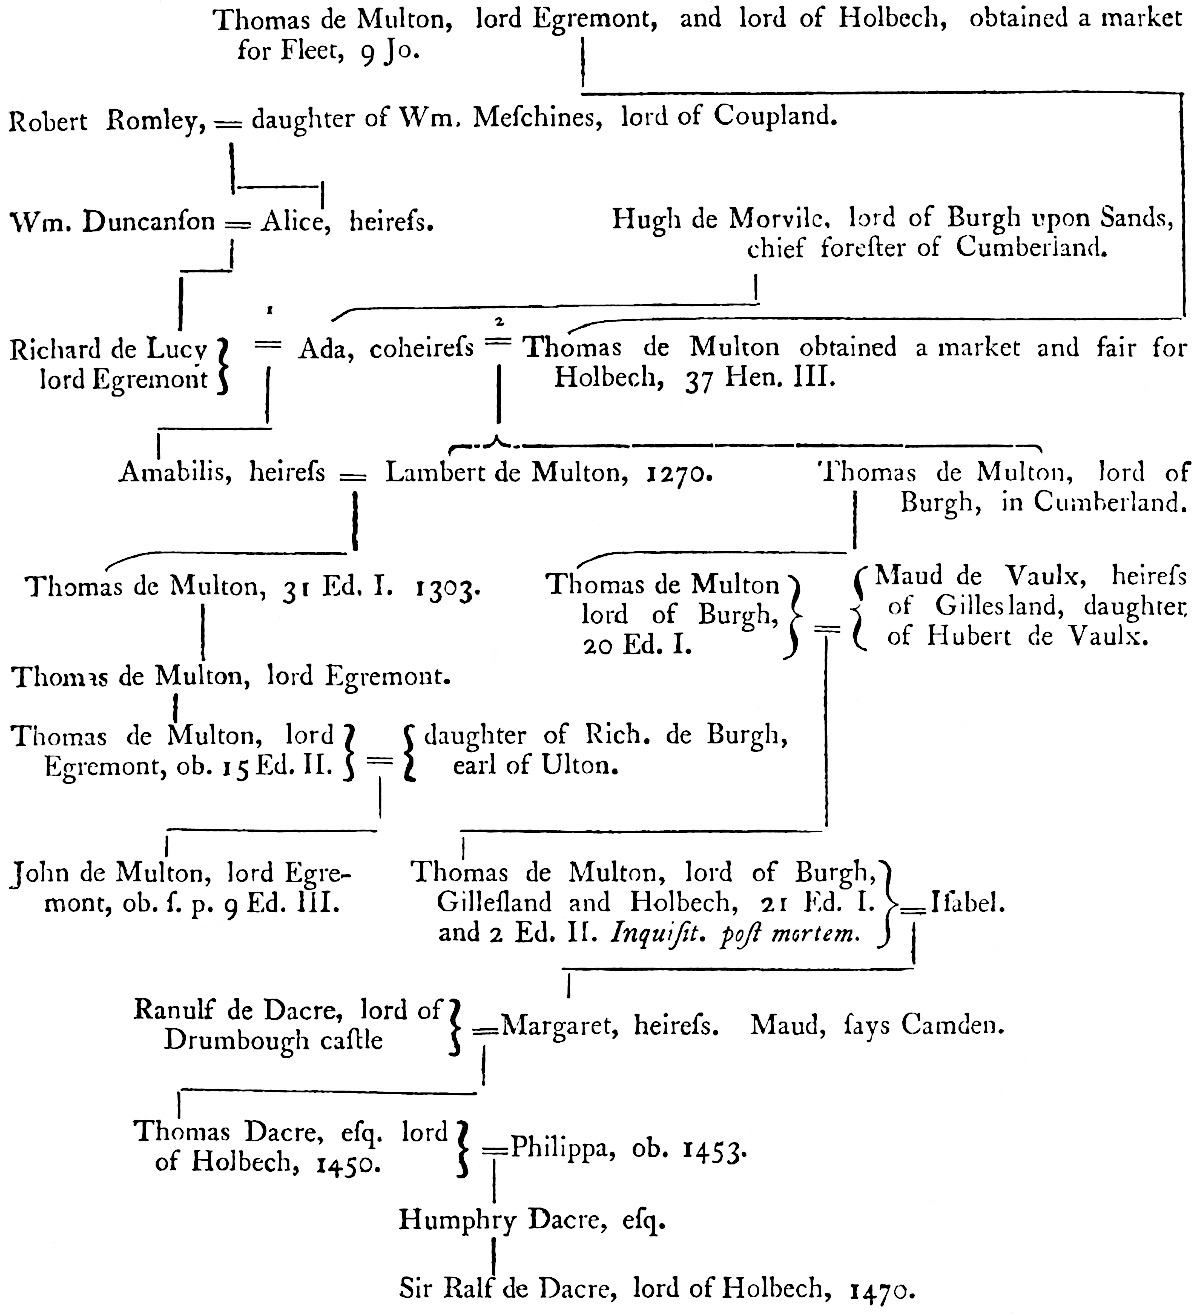 Genealogy of Moulton